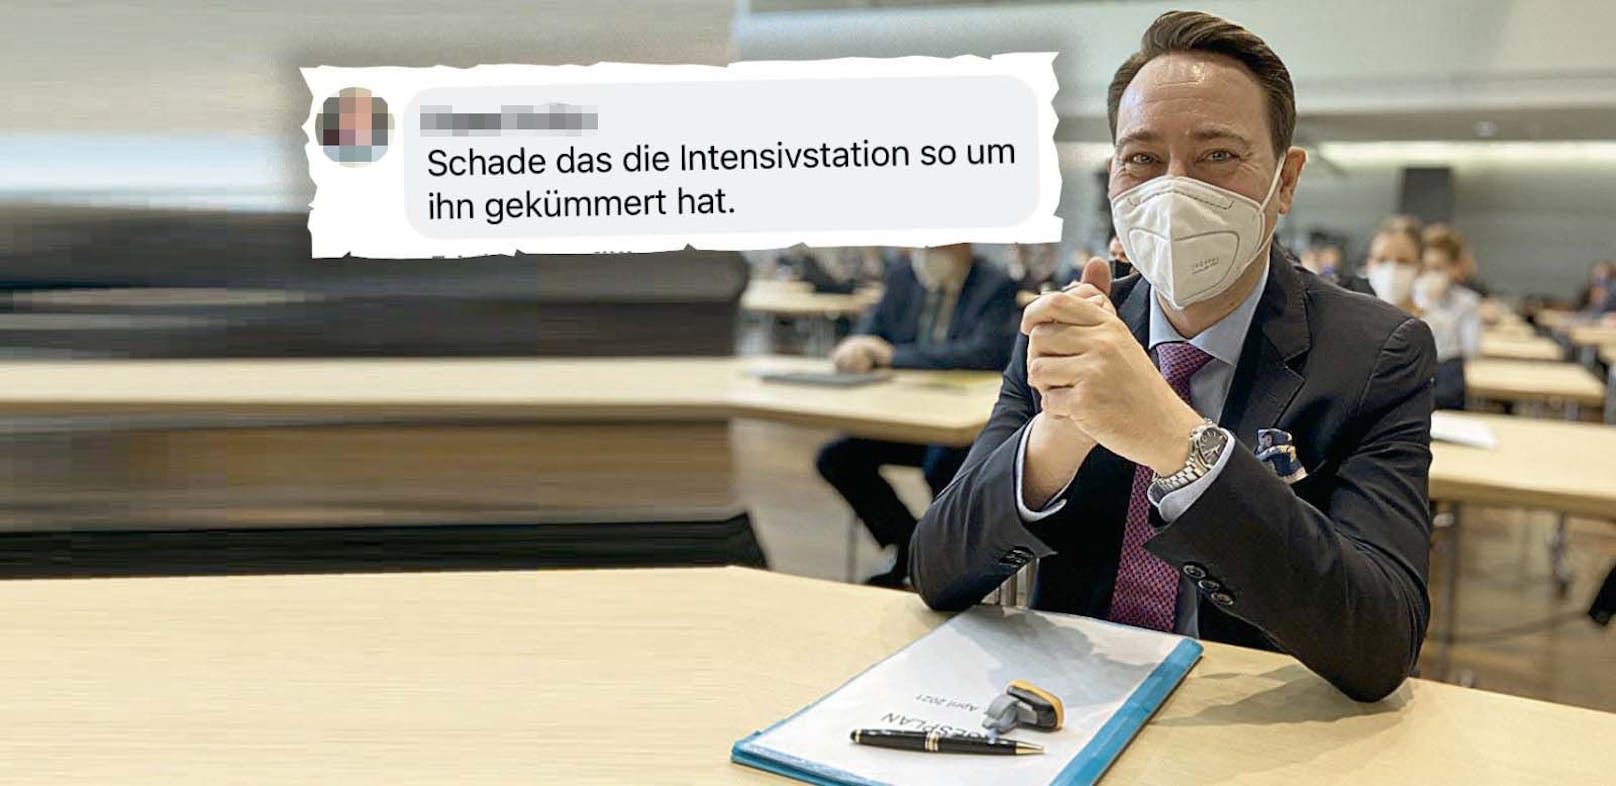 Facebook-User wünscht FPÖ-Politiker den Corona-Tod